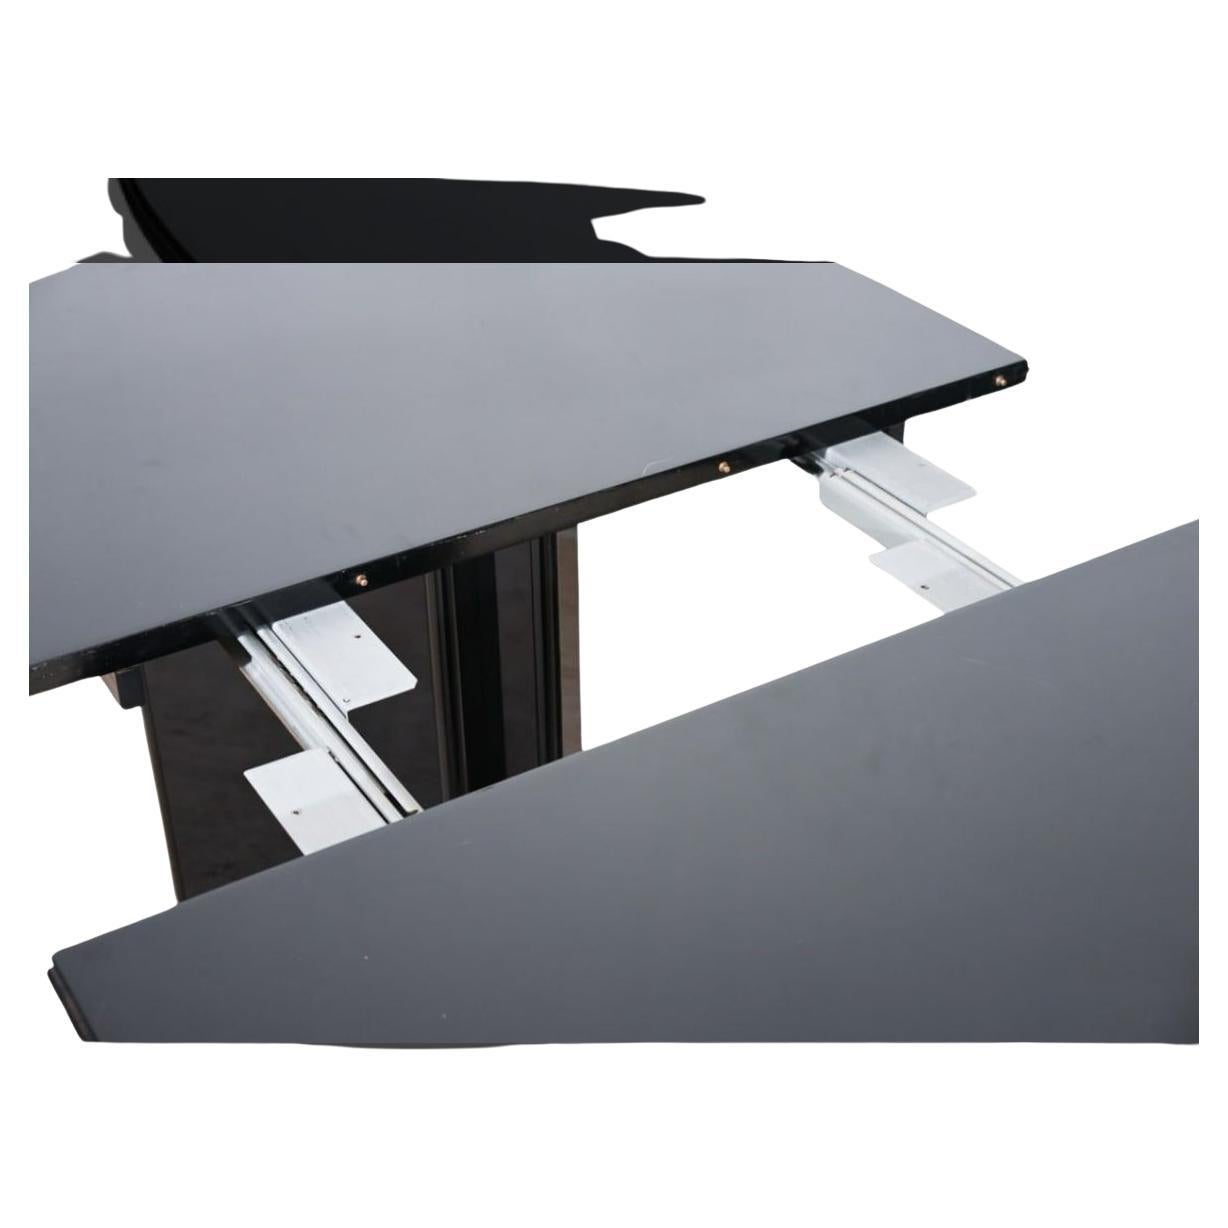 Post Modern Gloss Black Lacquered Double Pedestal Oval Dining Table with Leaf.

Maße: 30 Zoll x 42 Zoll x 60 Zoll
(1) Blatt fügt 18 Zoll hinzu